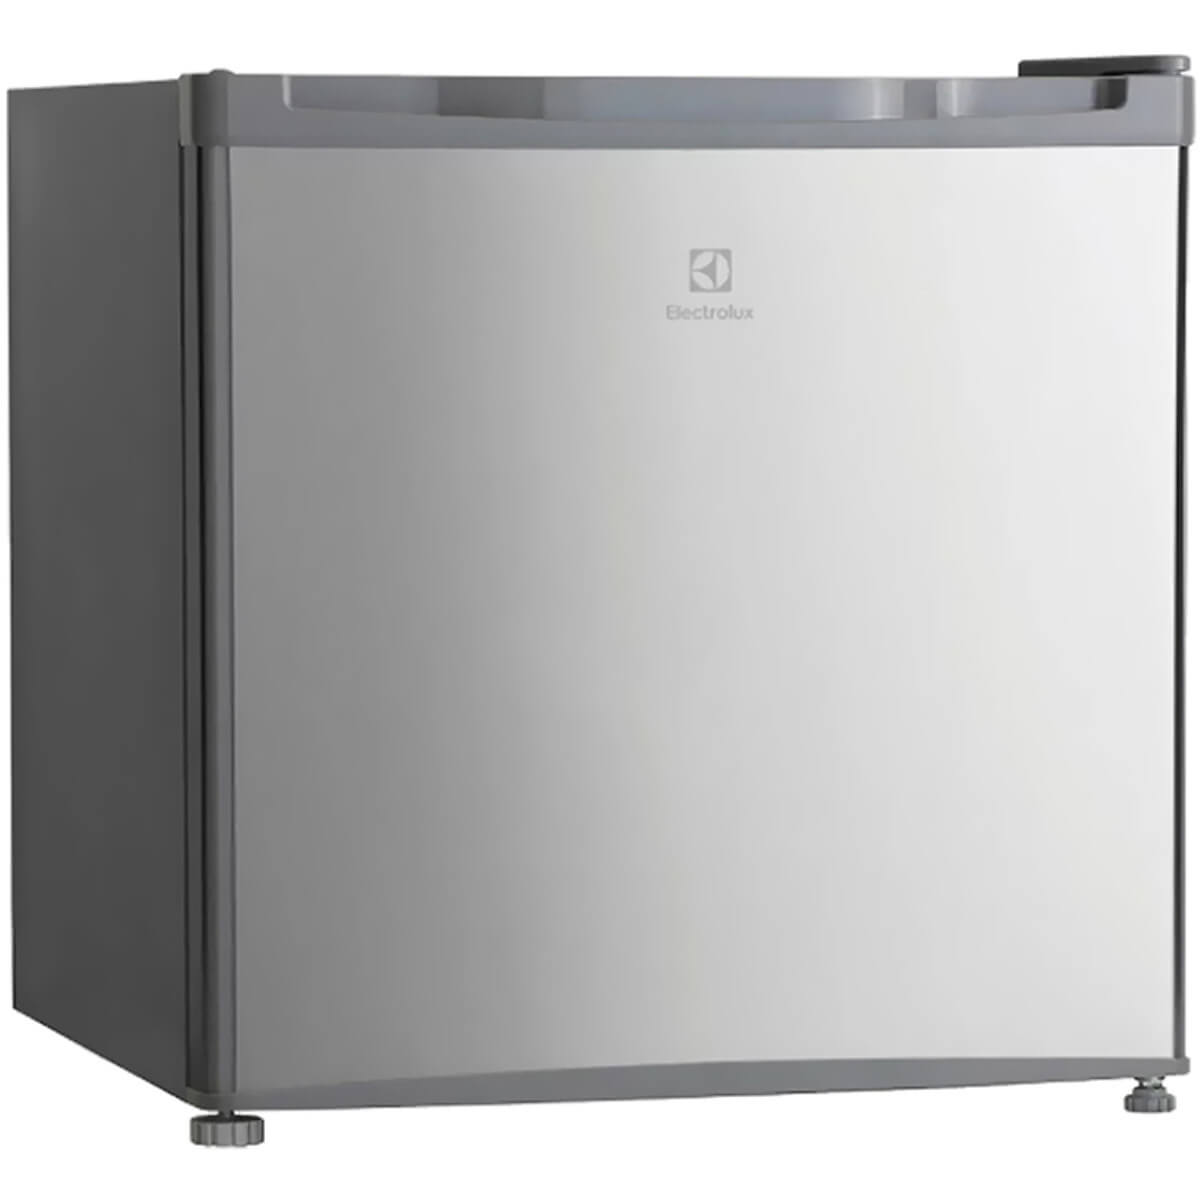 Tủ lạnh mini Electrolux 50L